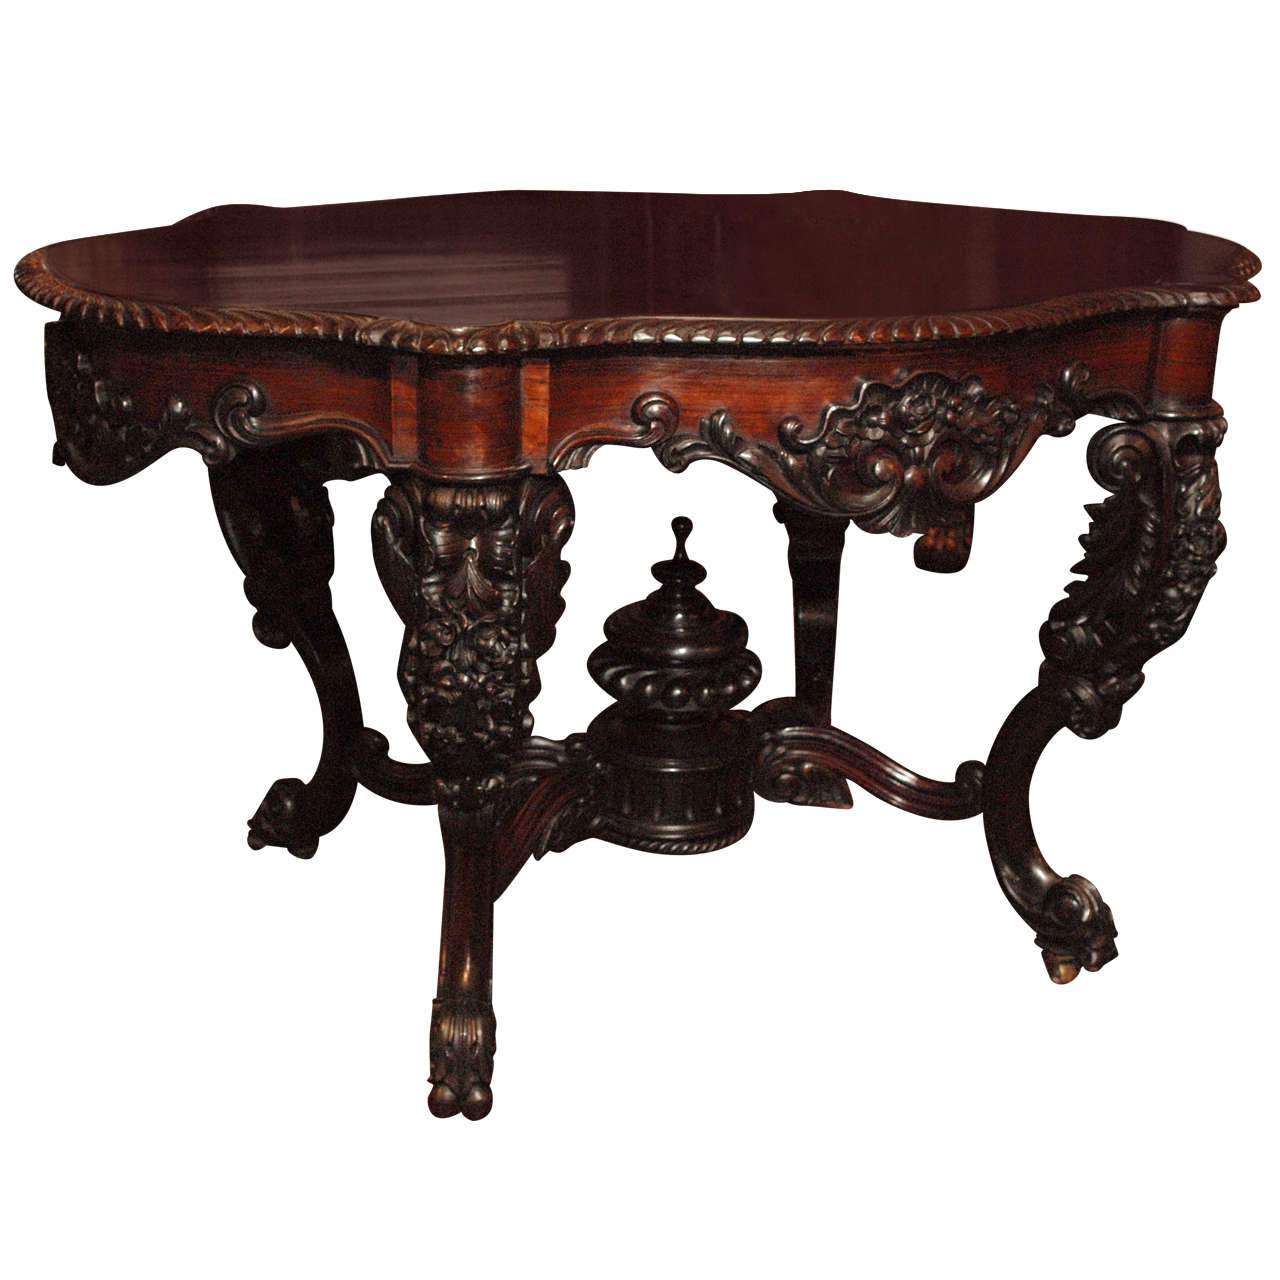 Antique Black Walnut Parlour Table circa 1860-1870